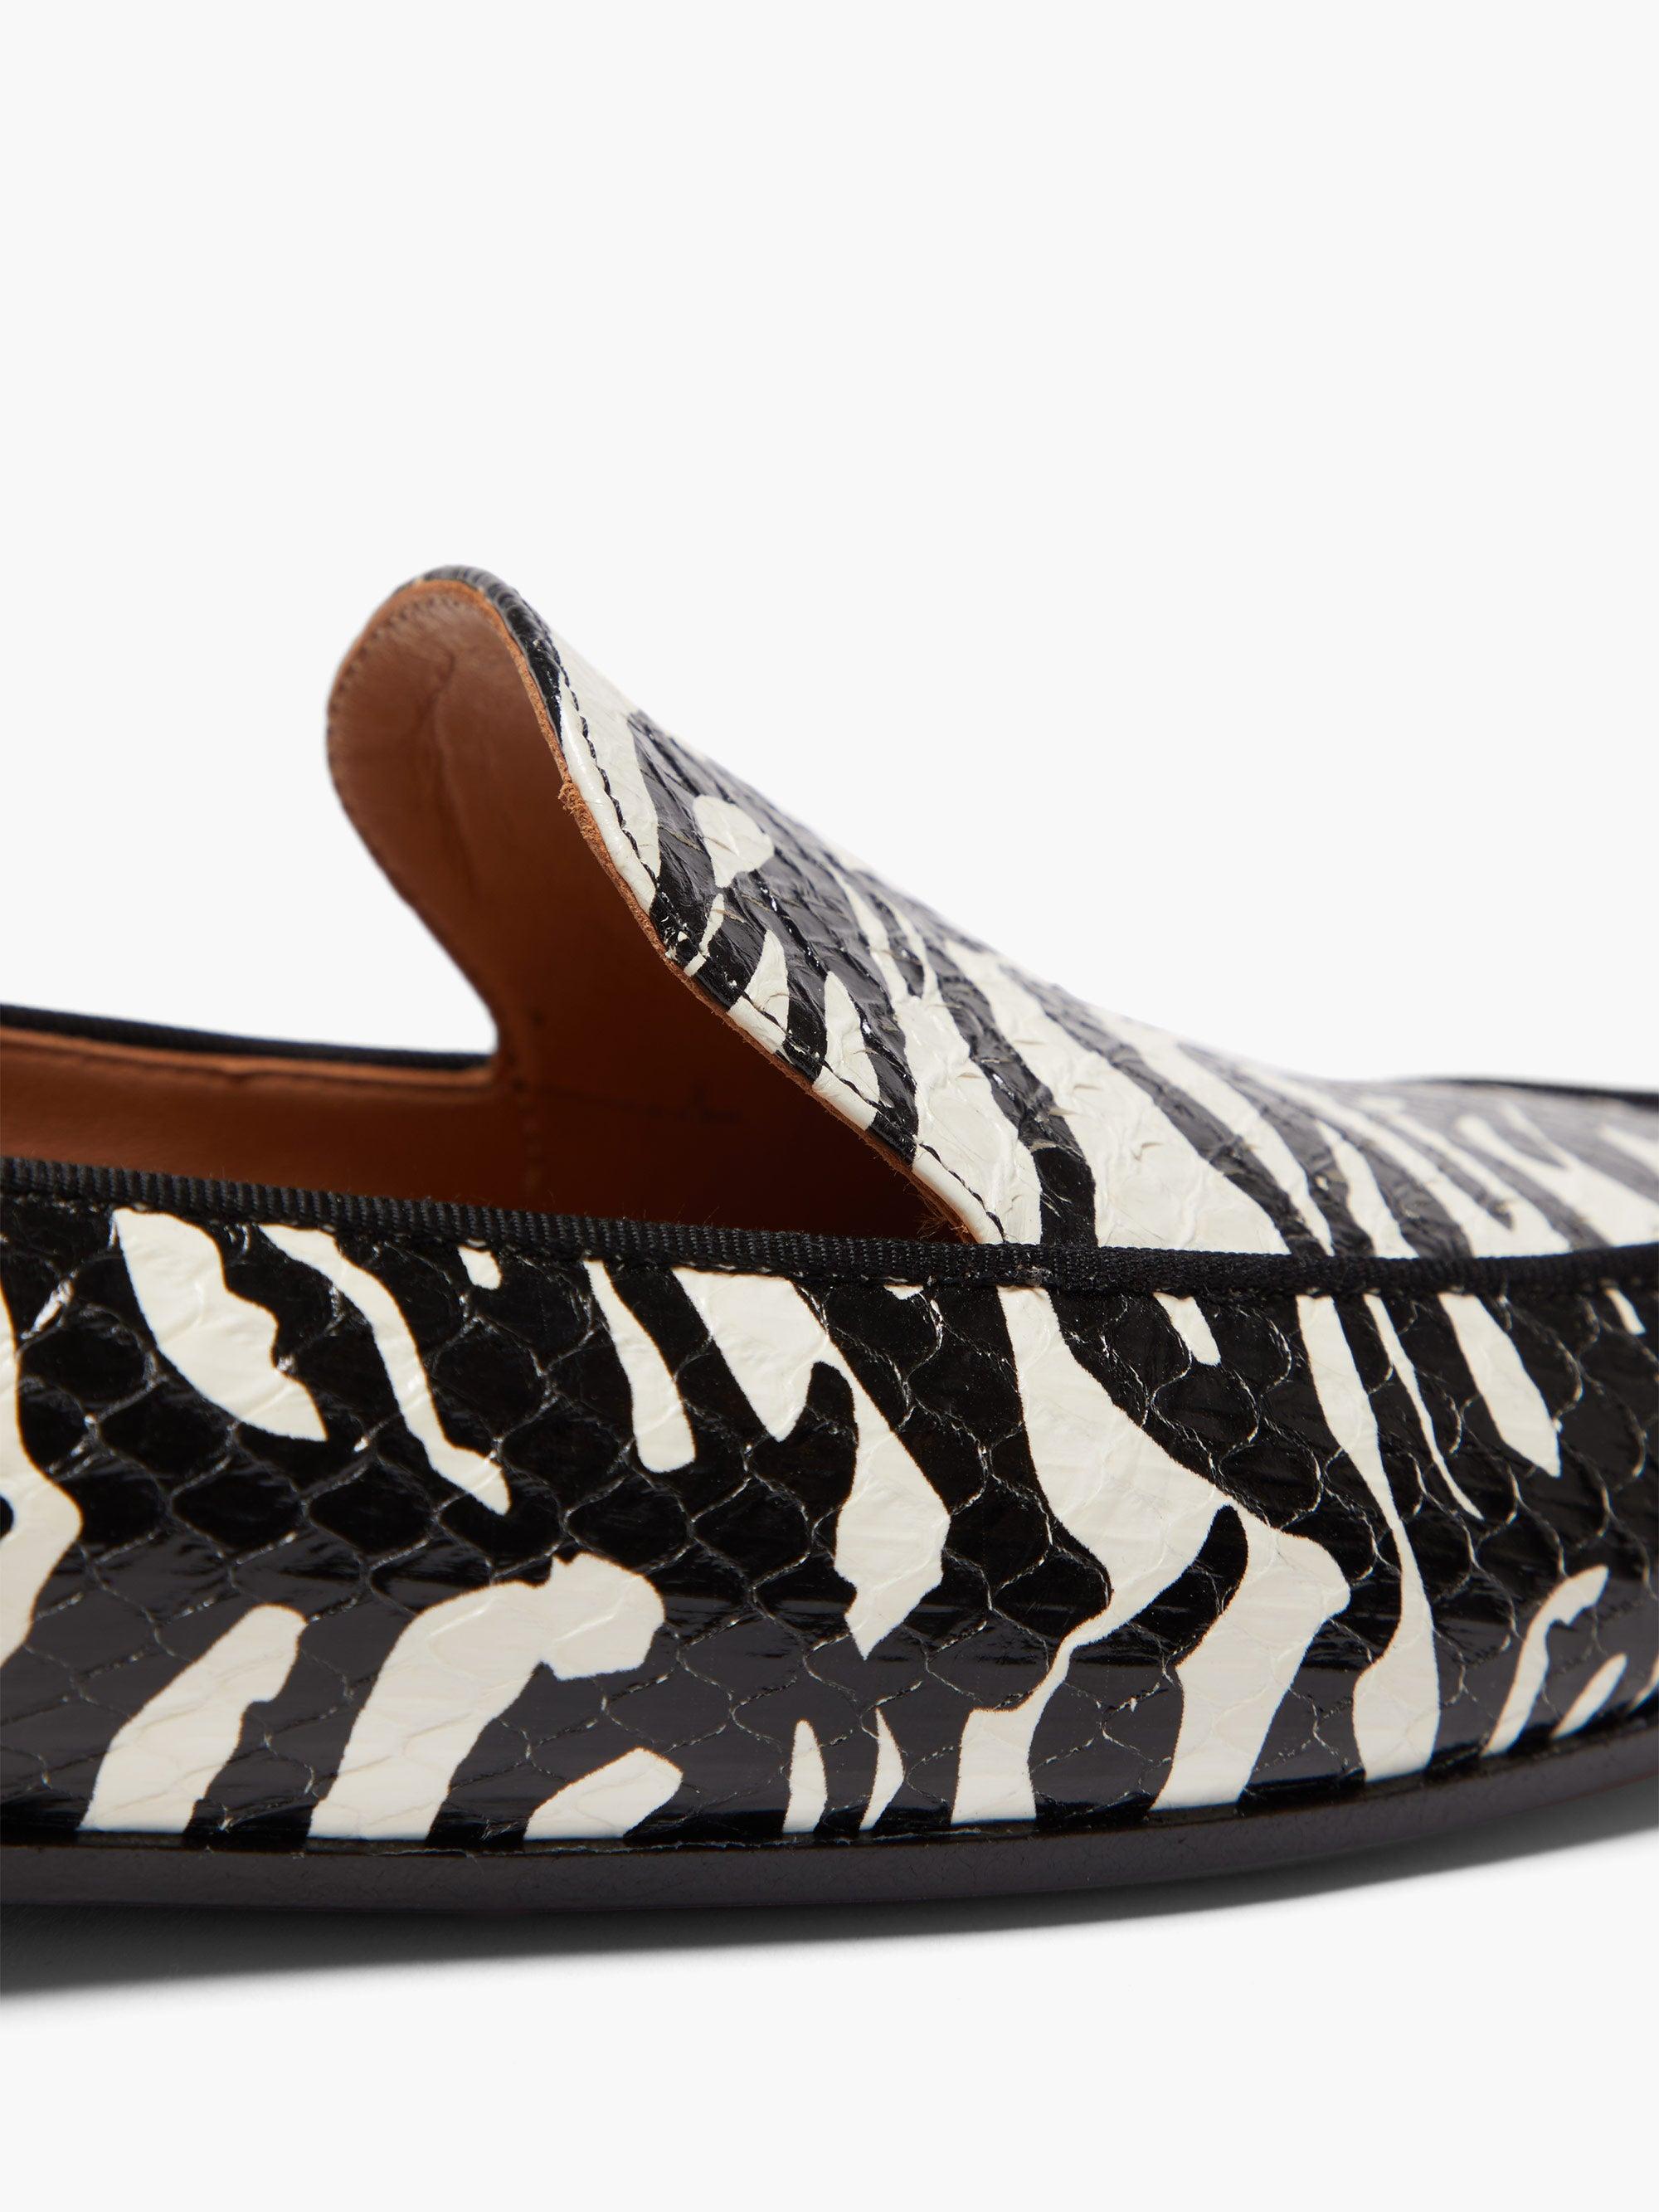 Aquazzura Leather Purist Tiger-print Elaphe Loafers in Black/White